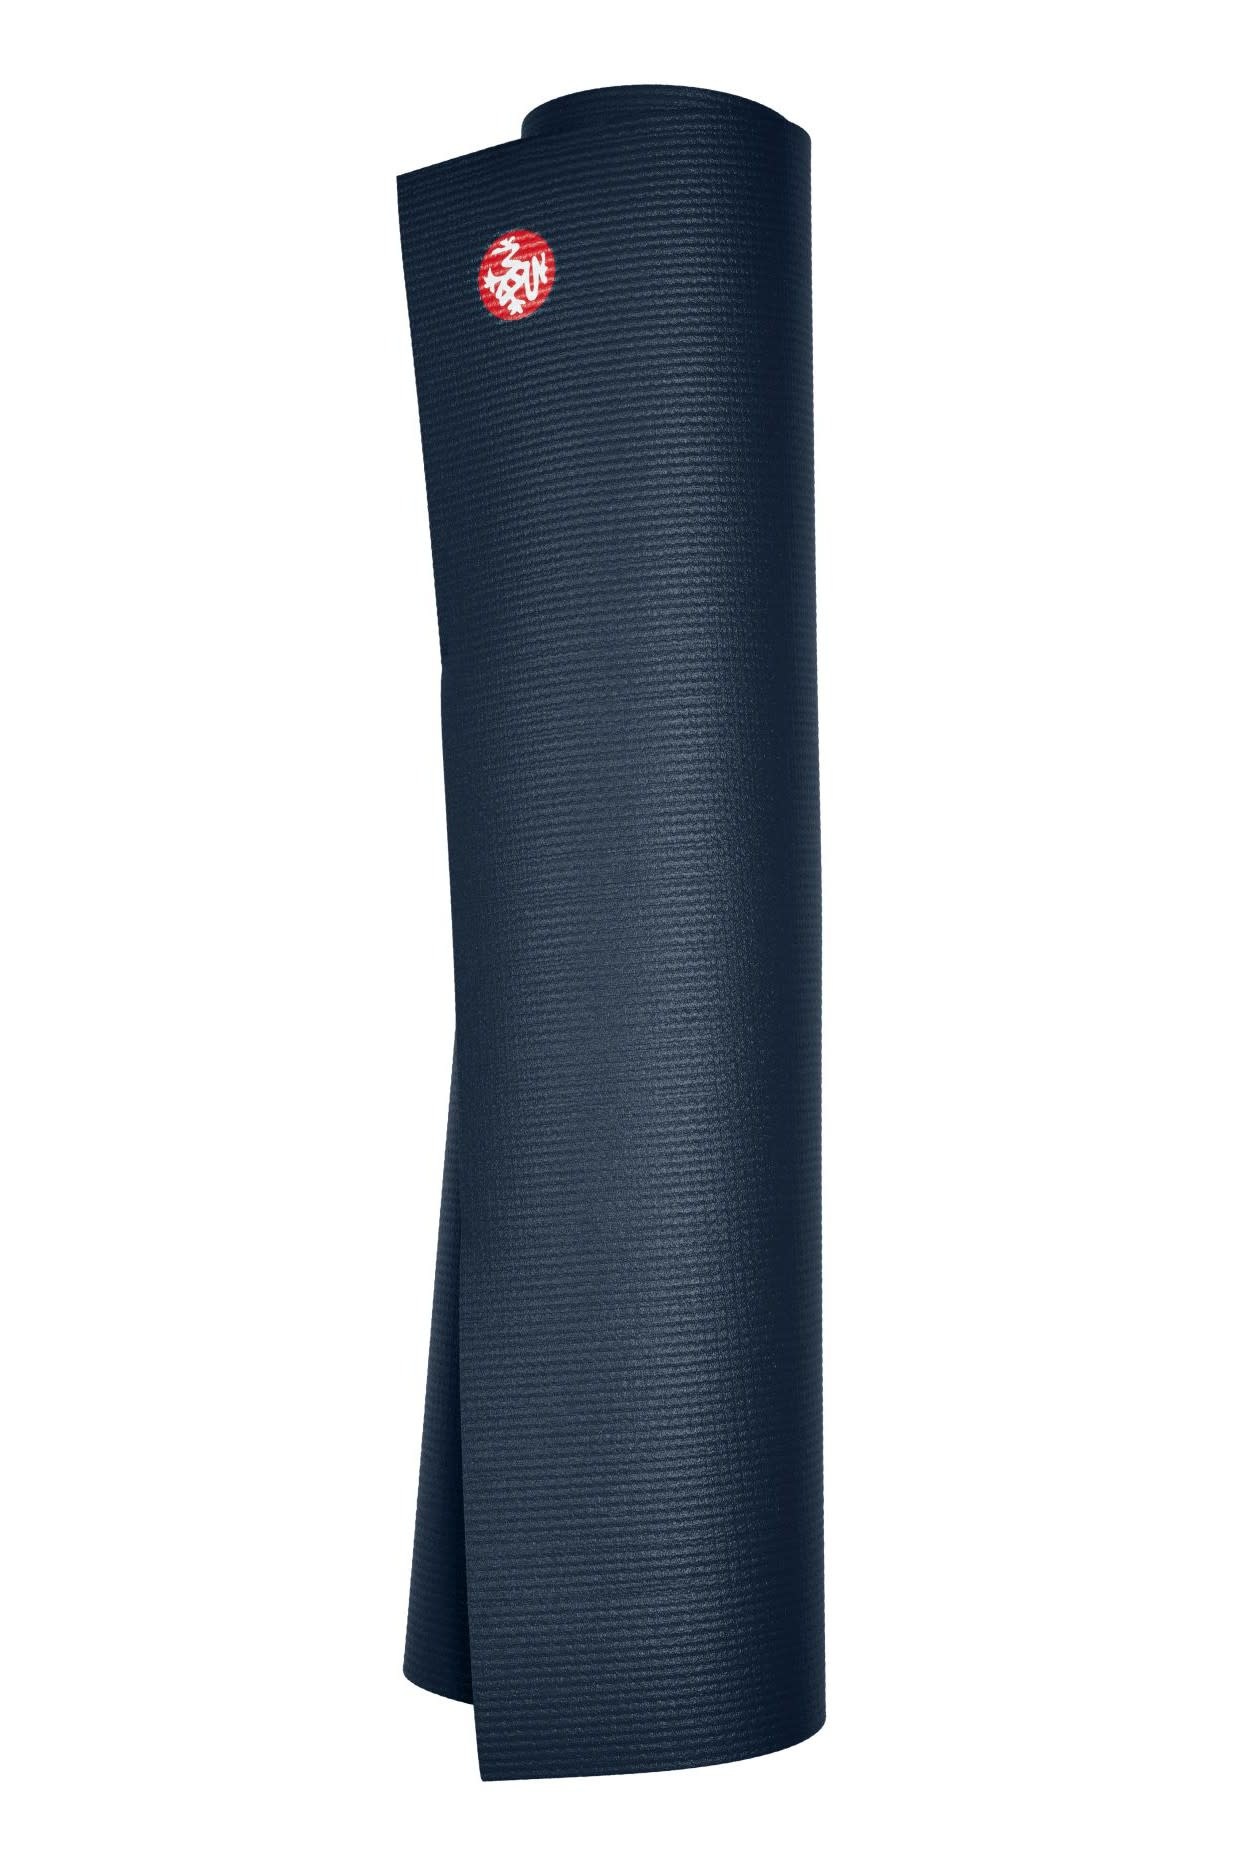 Manduka Pro Yoga Mat 180cm 66cm 6mm - Midnight-2